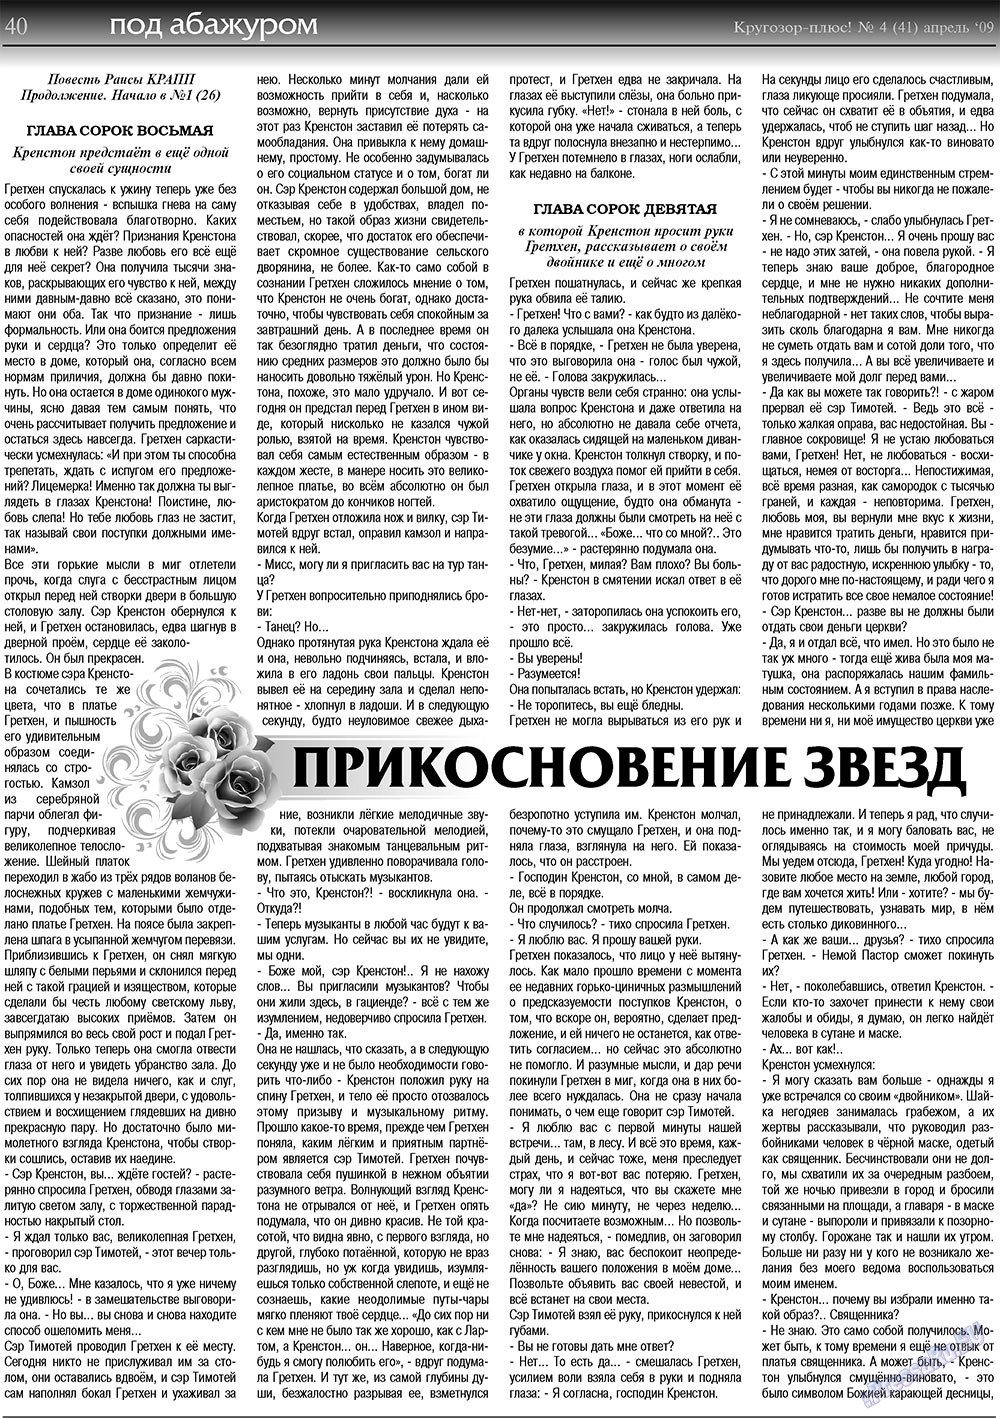 Кругозор плюс! (газета). 2009 год, номер 4, стр. 40